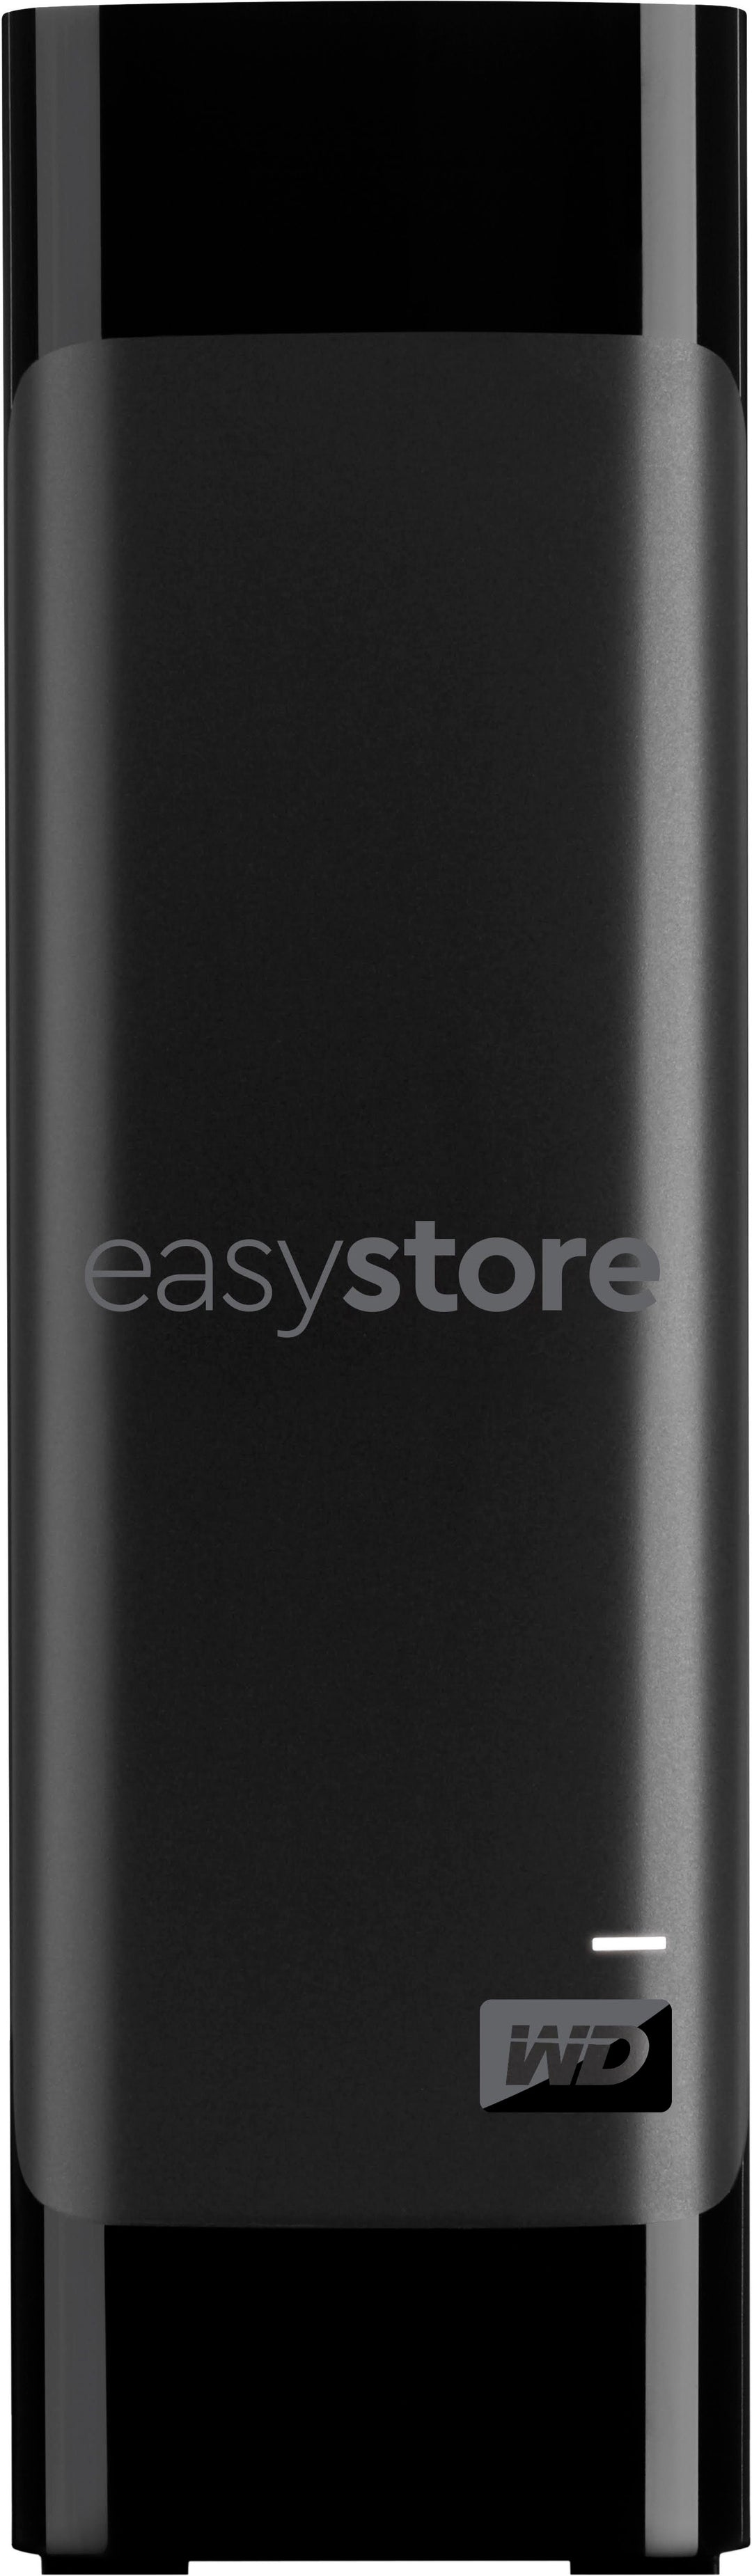 WD - easystore 22TB External USB 3.0 Hard Drive - Black_0